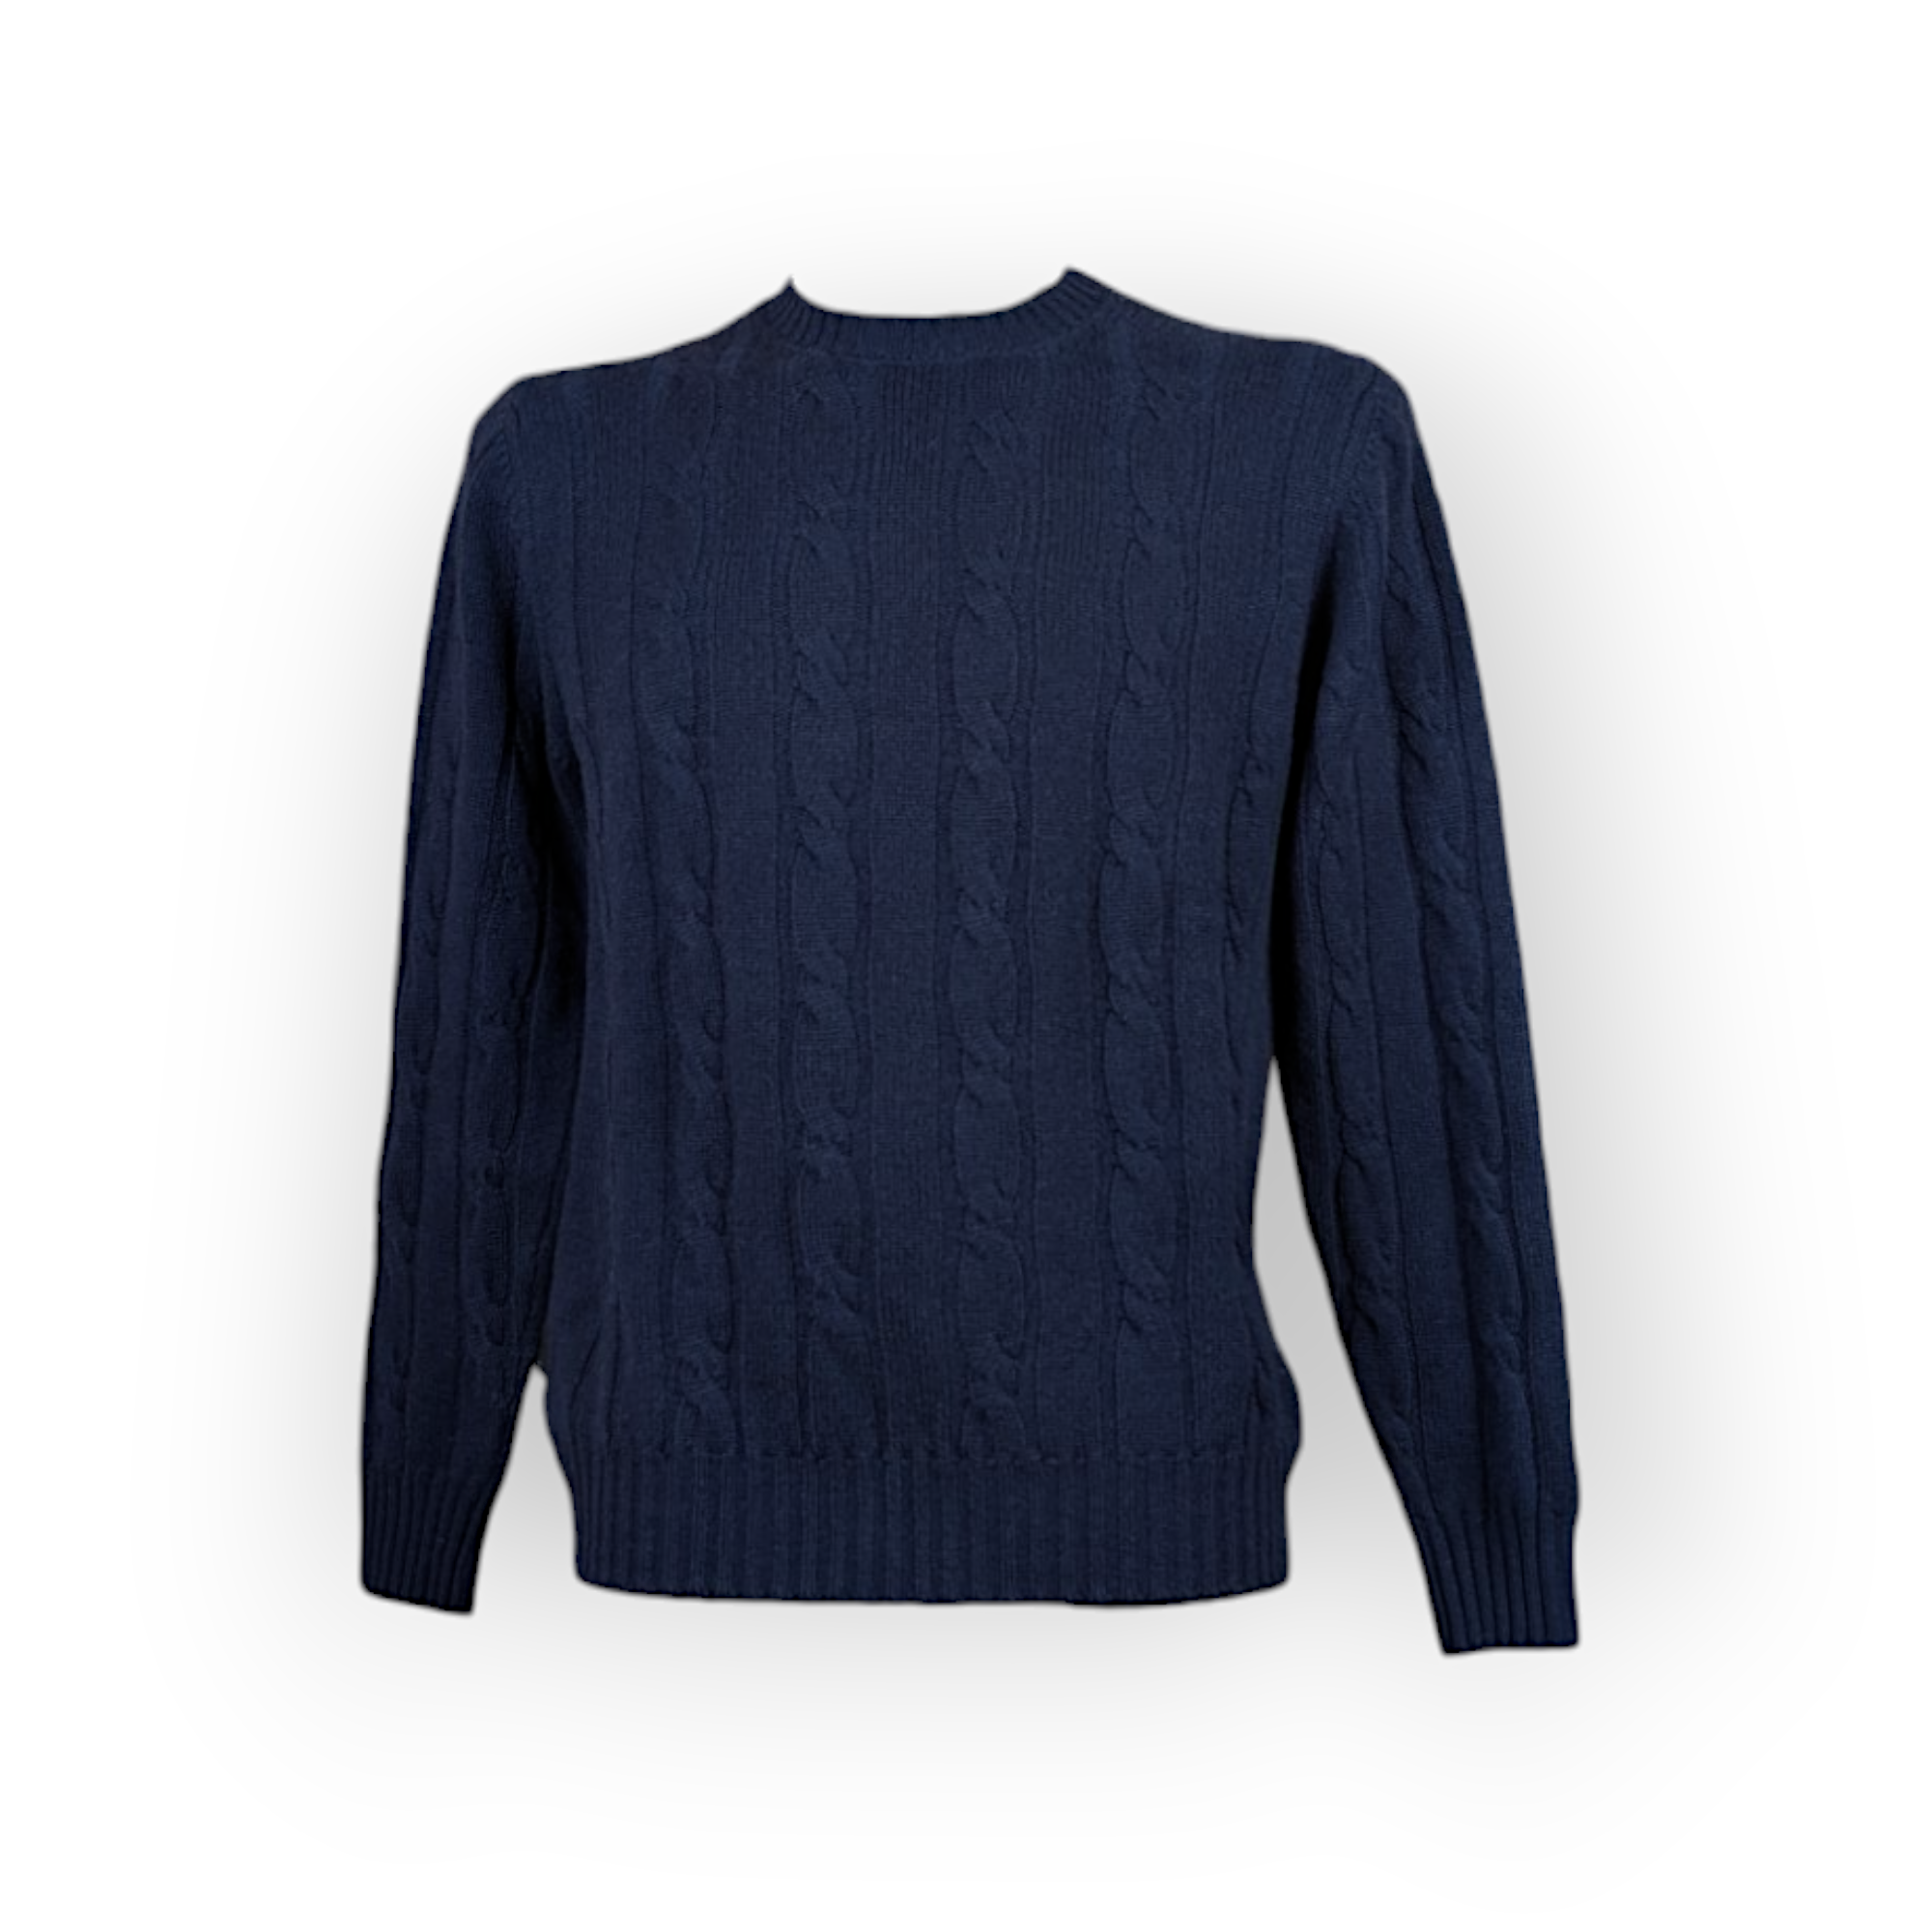 Lorenzoni Navy Blue Cashmere Sweater